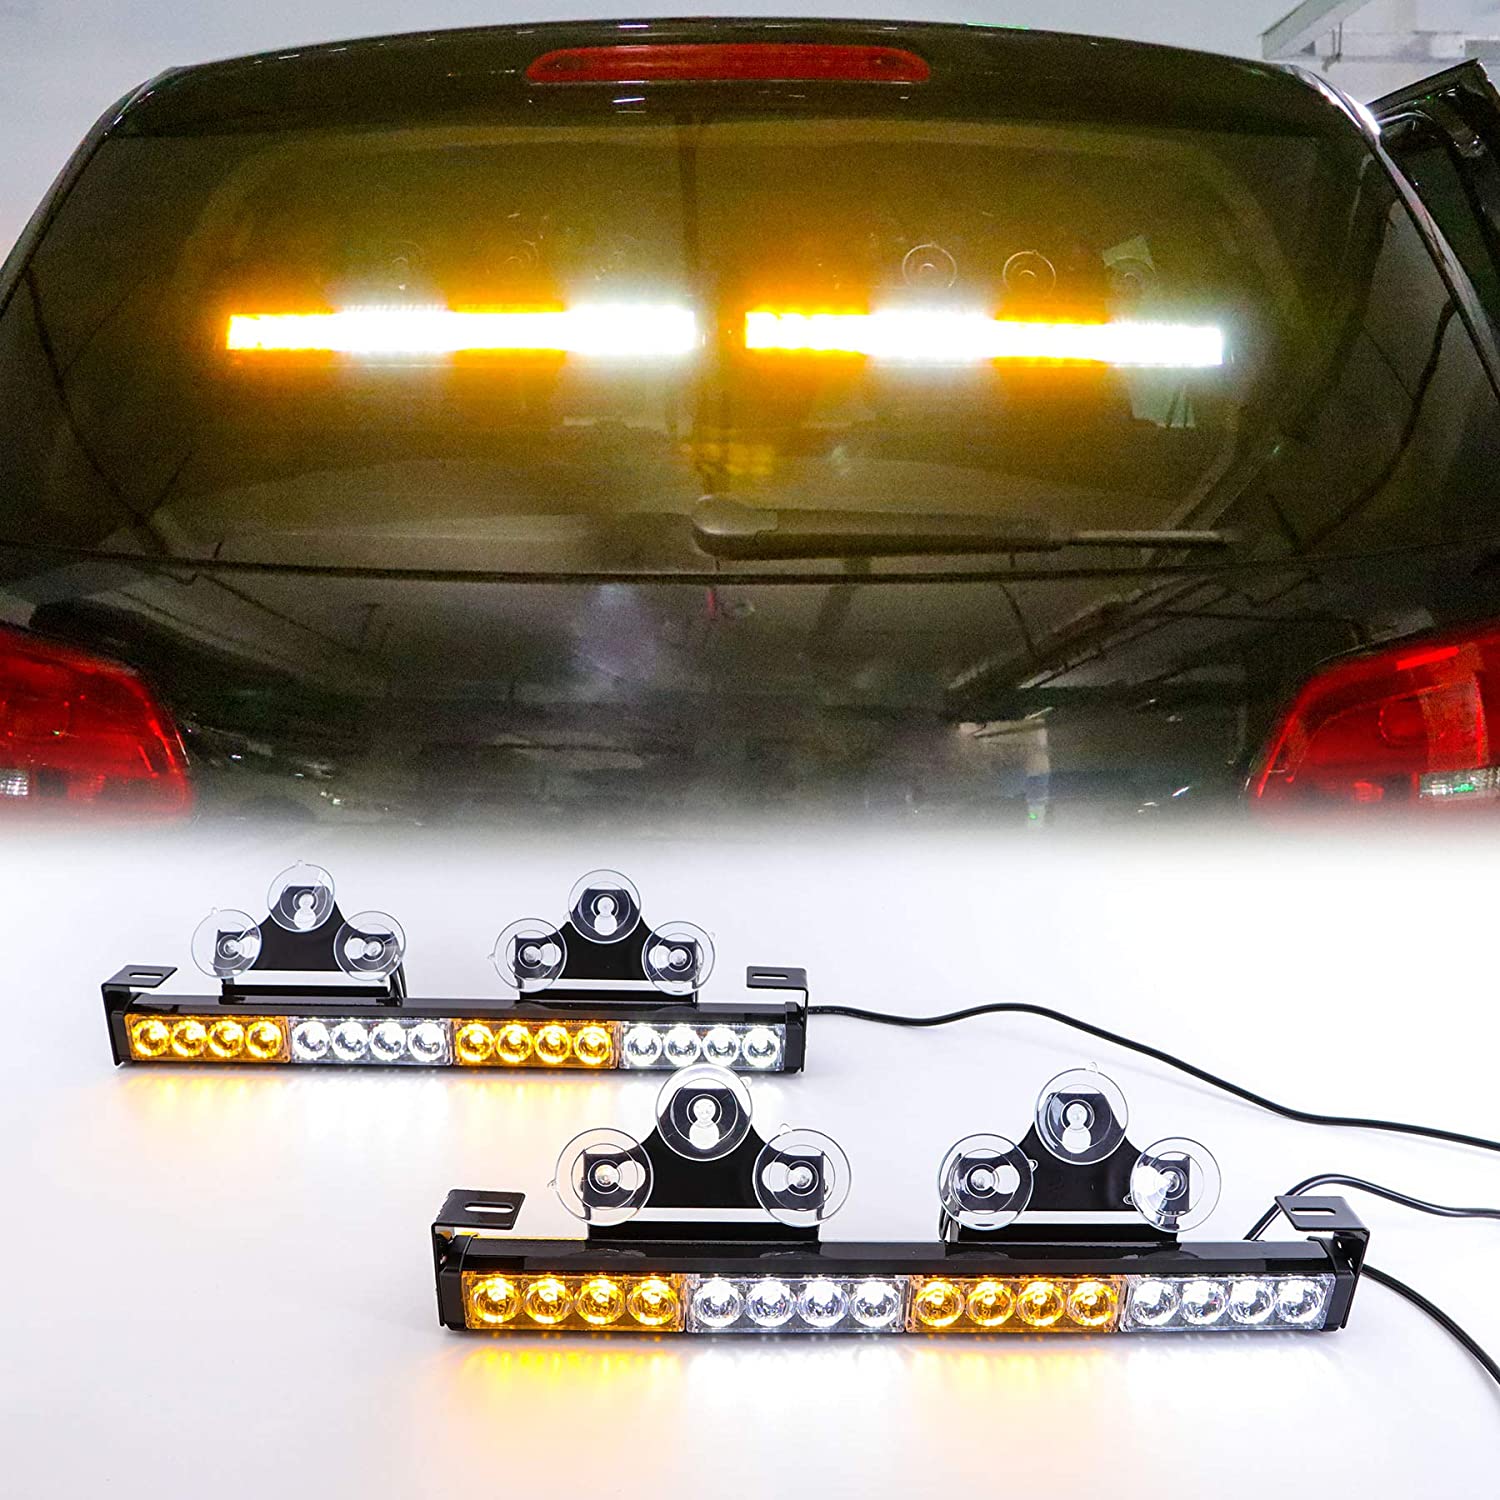 Knipperende LED lampjes voor de auto geel wit multi color